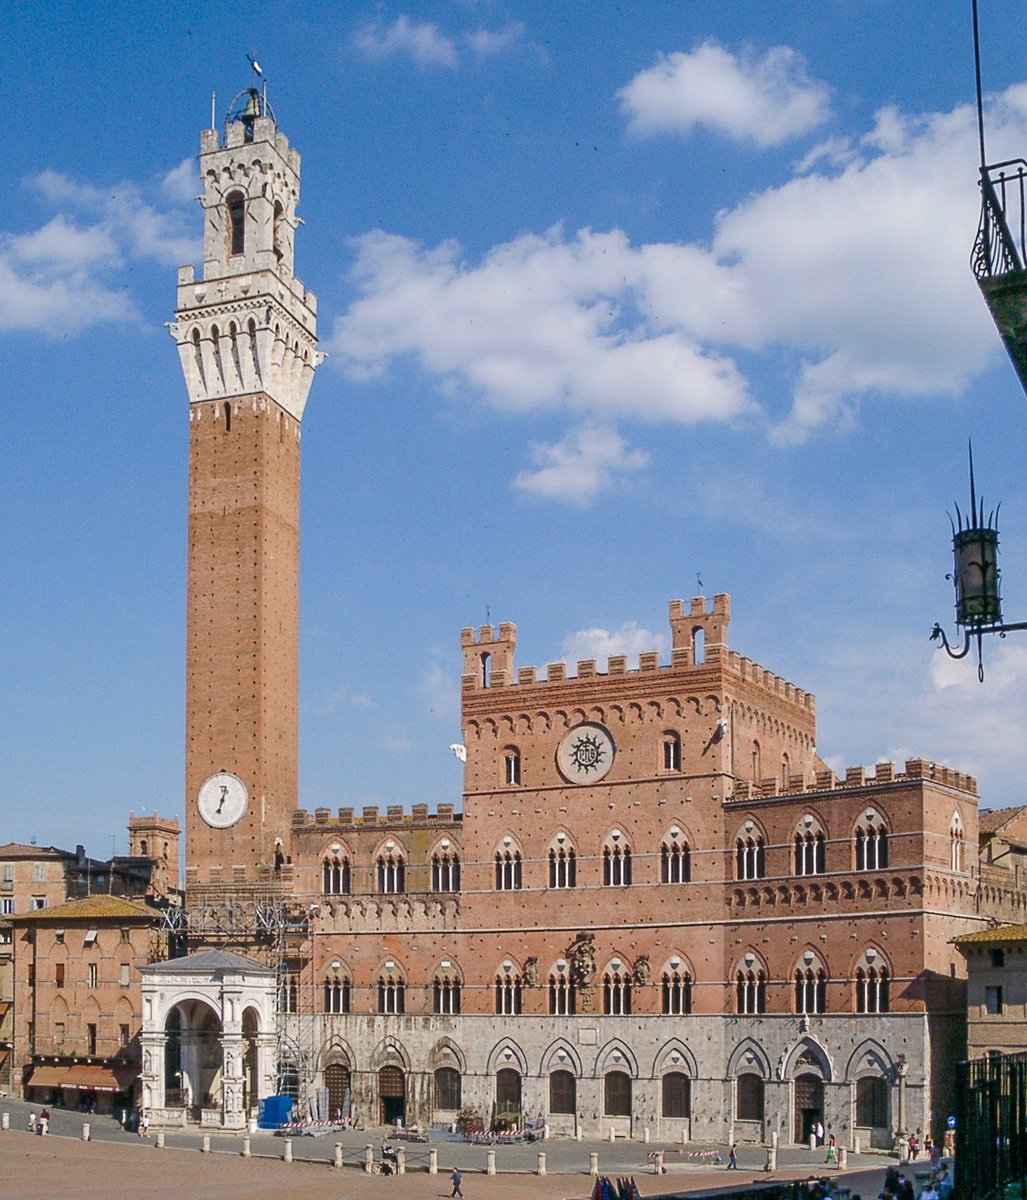 Siena centro storico patrimonio UNESCO @igerssiena
#Meraviglie